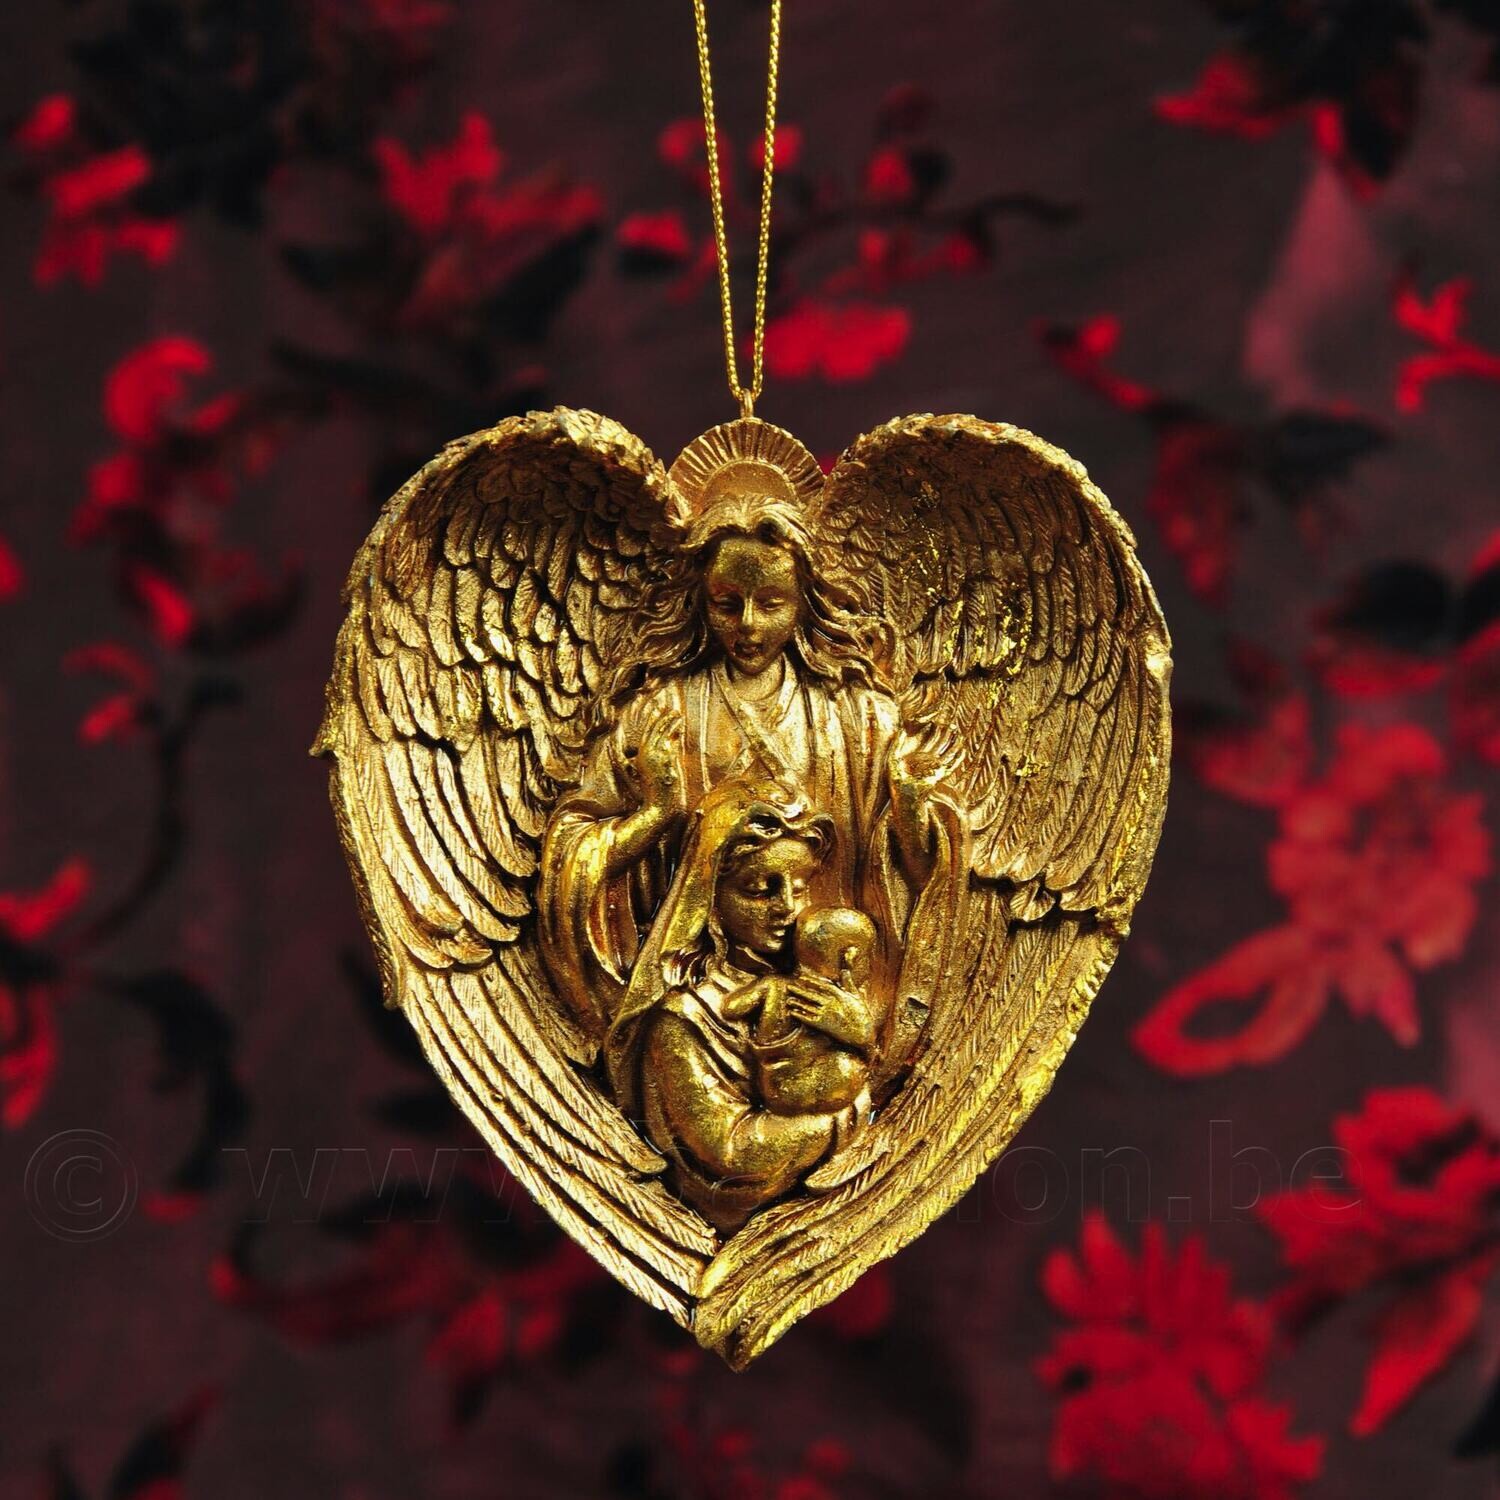 Beschermengel met Maria en kind - amulet / bas-reliëf - brons en goud patina